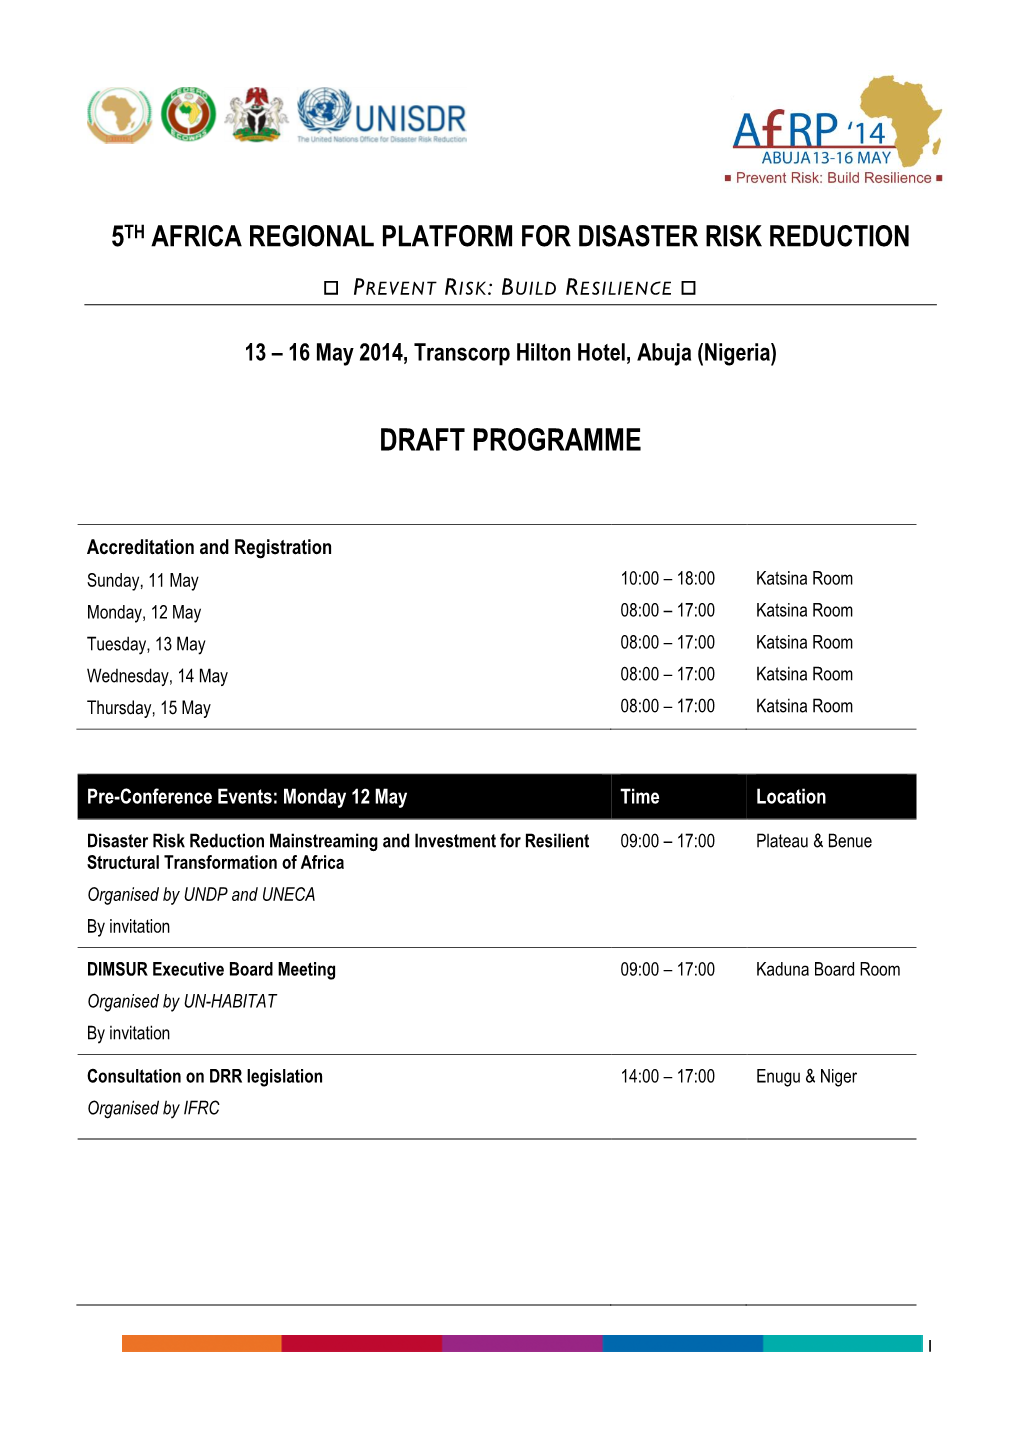 Fifth Africa Regional Platform for Disaster Risk Reduction